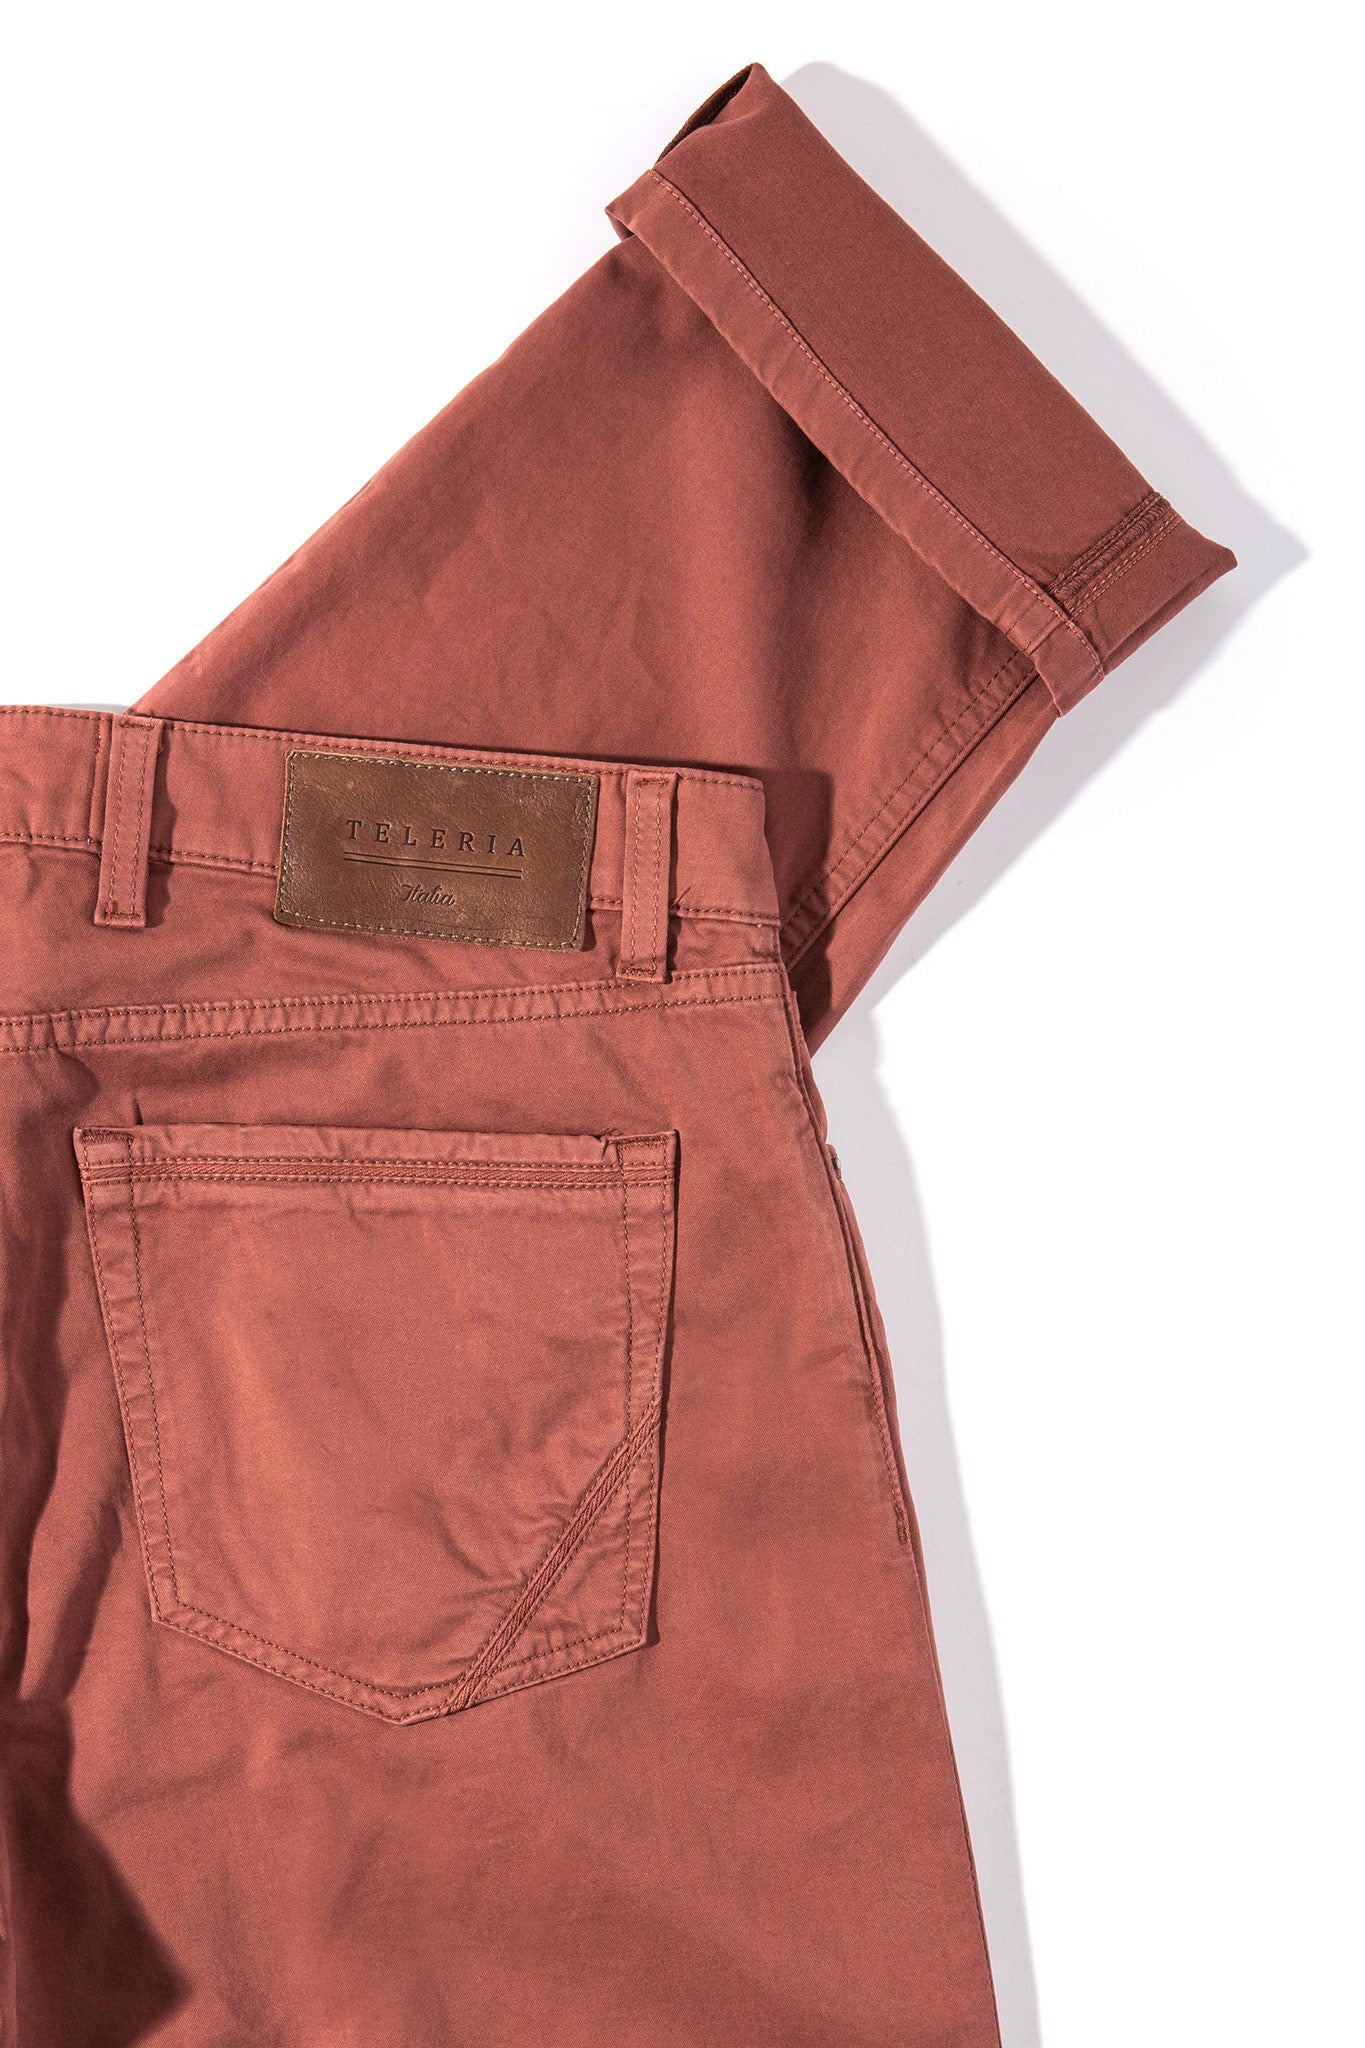 Gunnison Soft Touch In Arancio | Mens - Pants - 5 Pocket | Teleria Zed